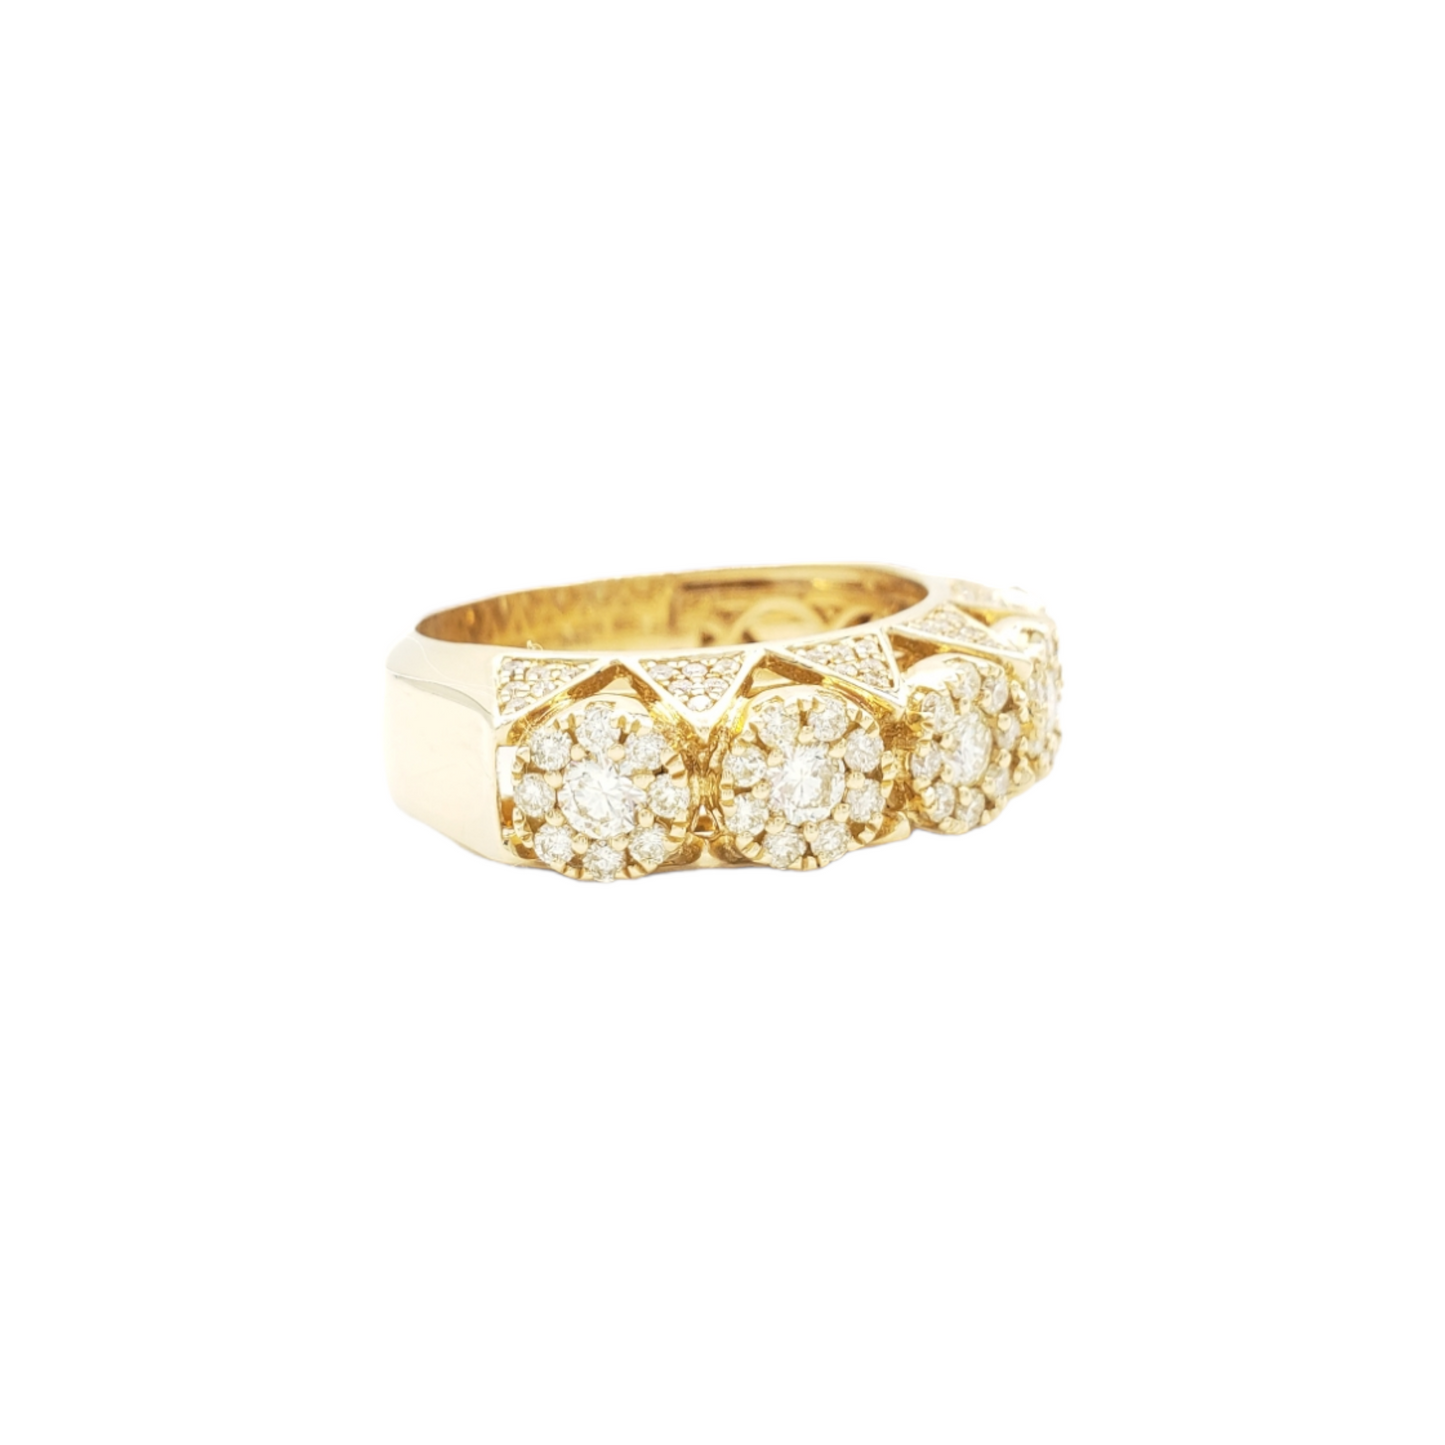 14k Diamond Ring With 1.70 Carats Of Diamonds #16721